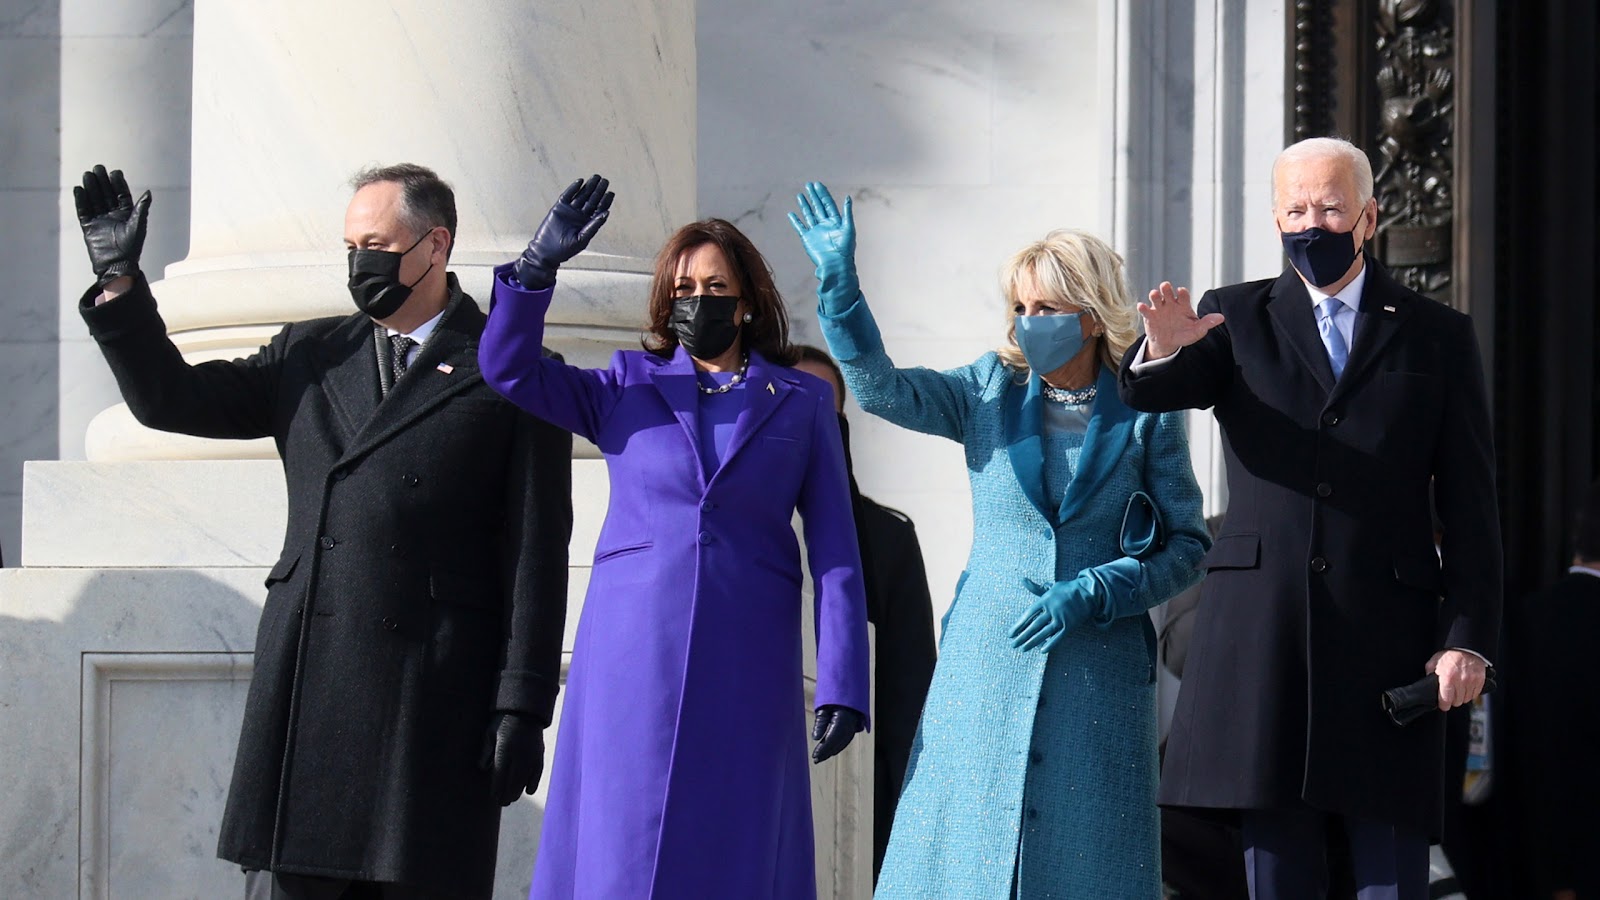 From left to right, Doug Emhoff, Kamala Harris, Jill Biden, and Joe Biden waving on inauguration day.